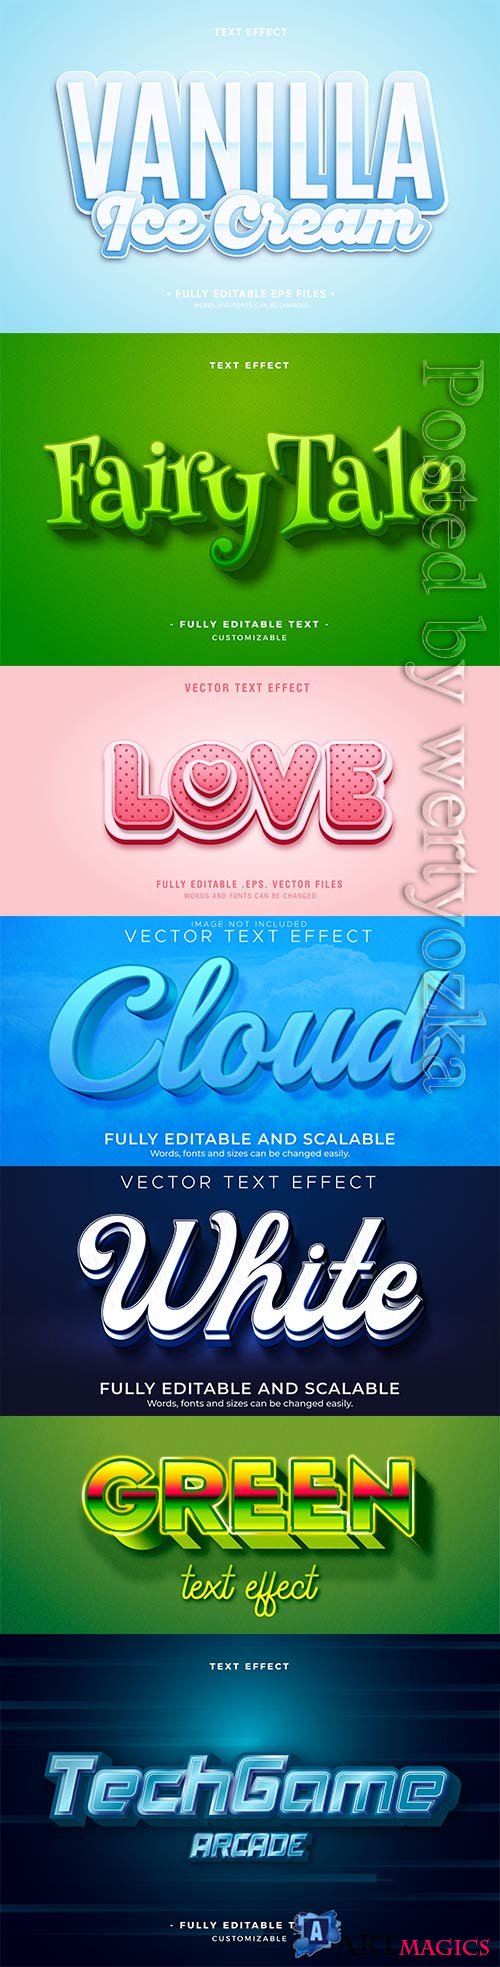 3d editable text style effect vector vol 370